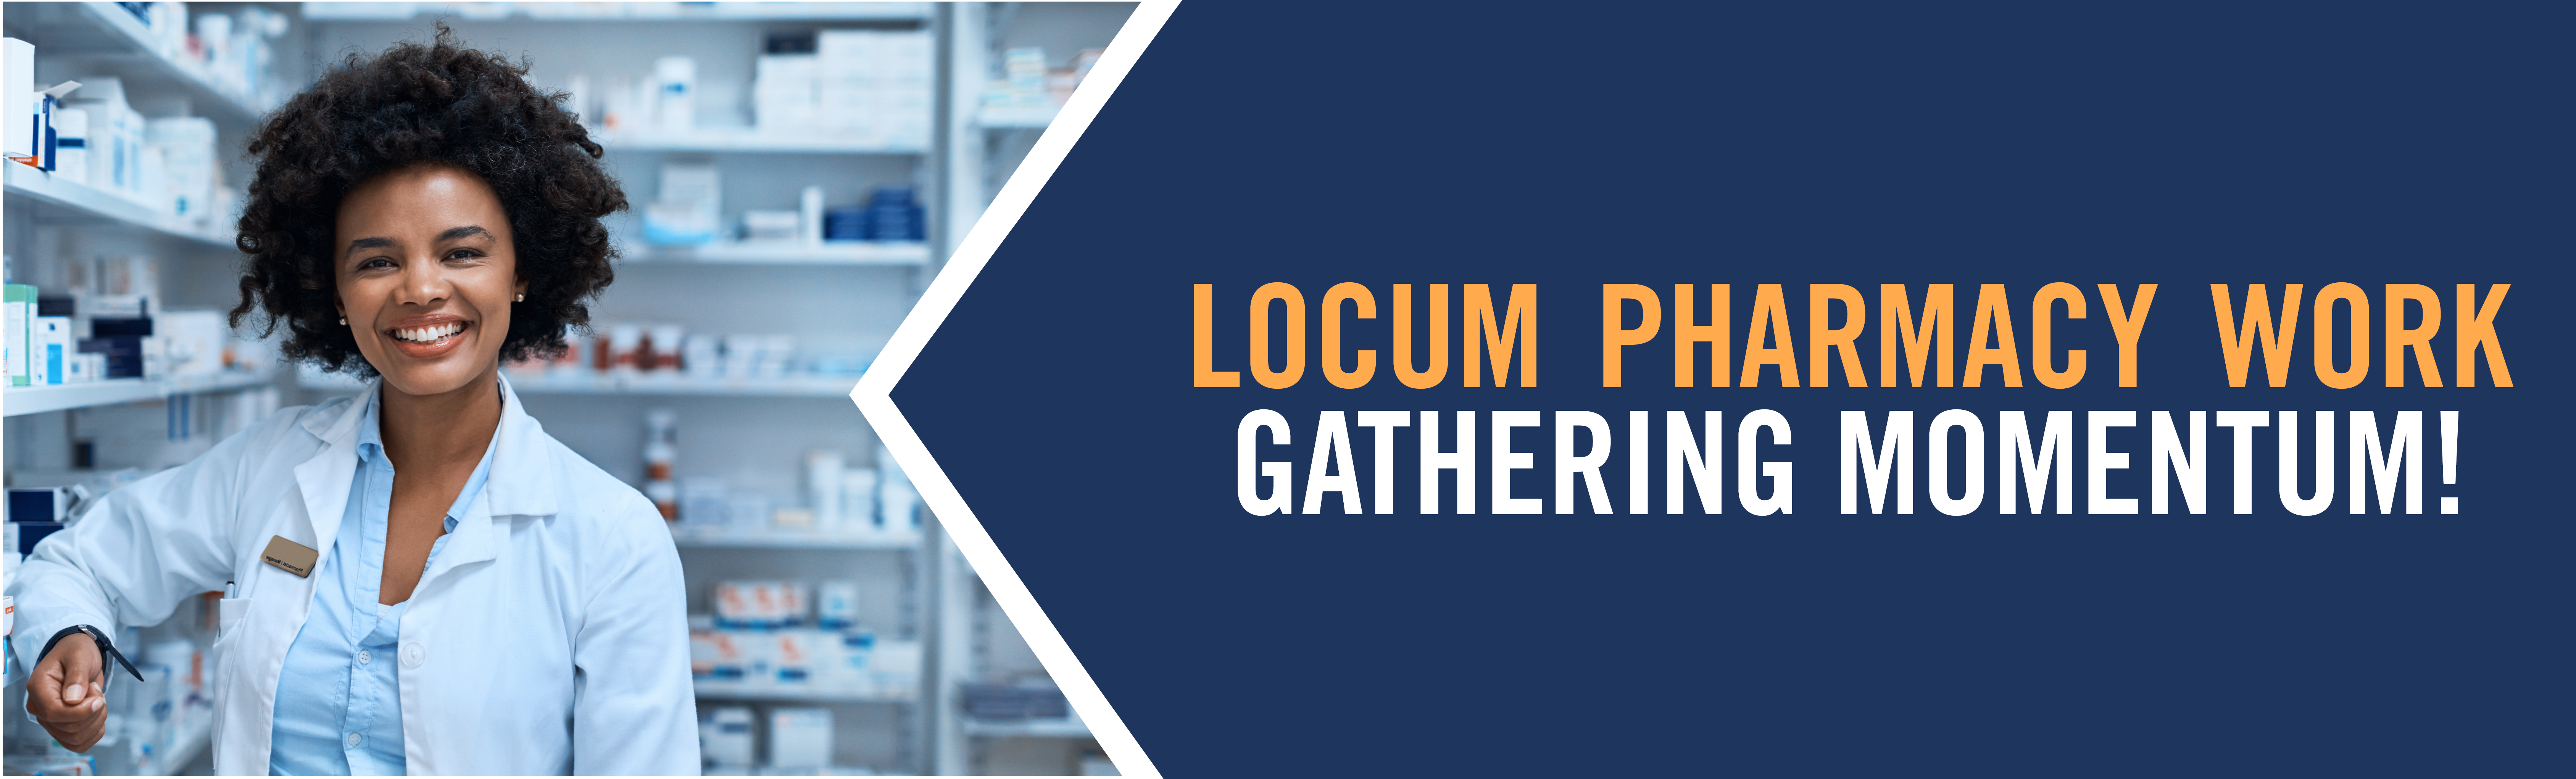 Locum Pharmacy Work - website